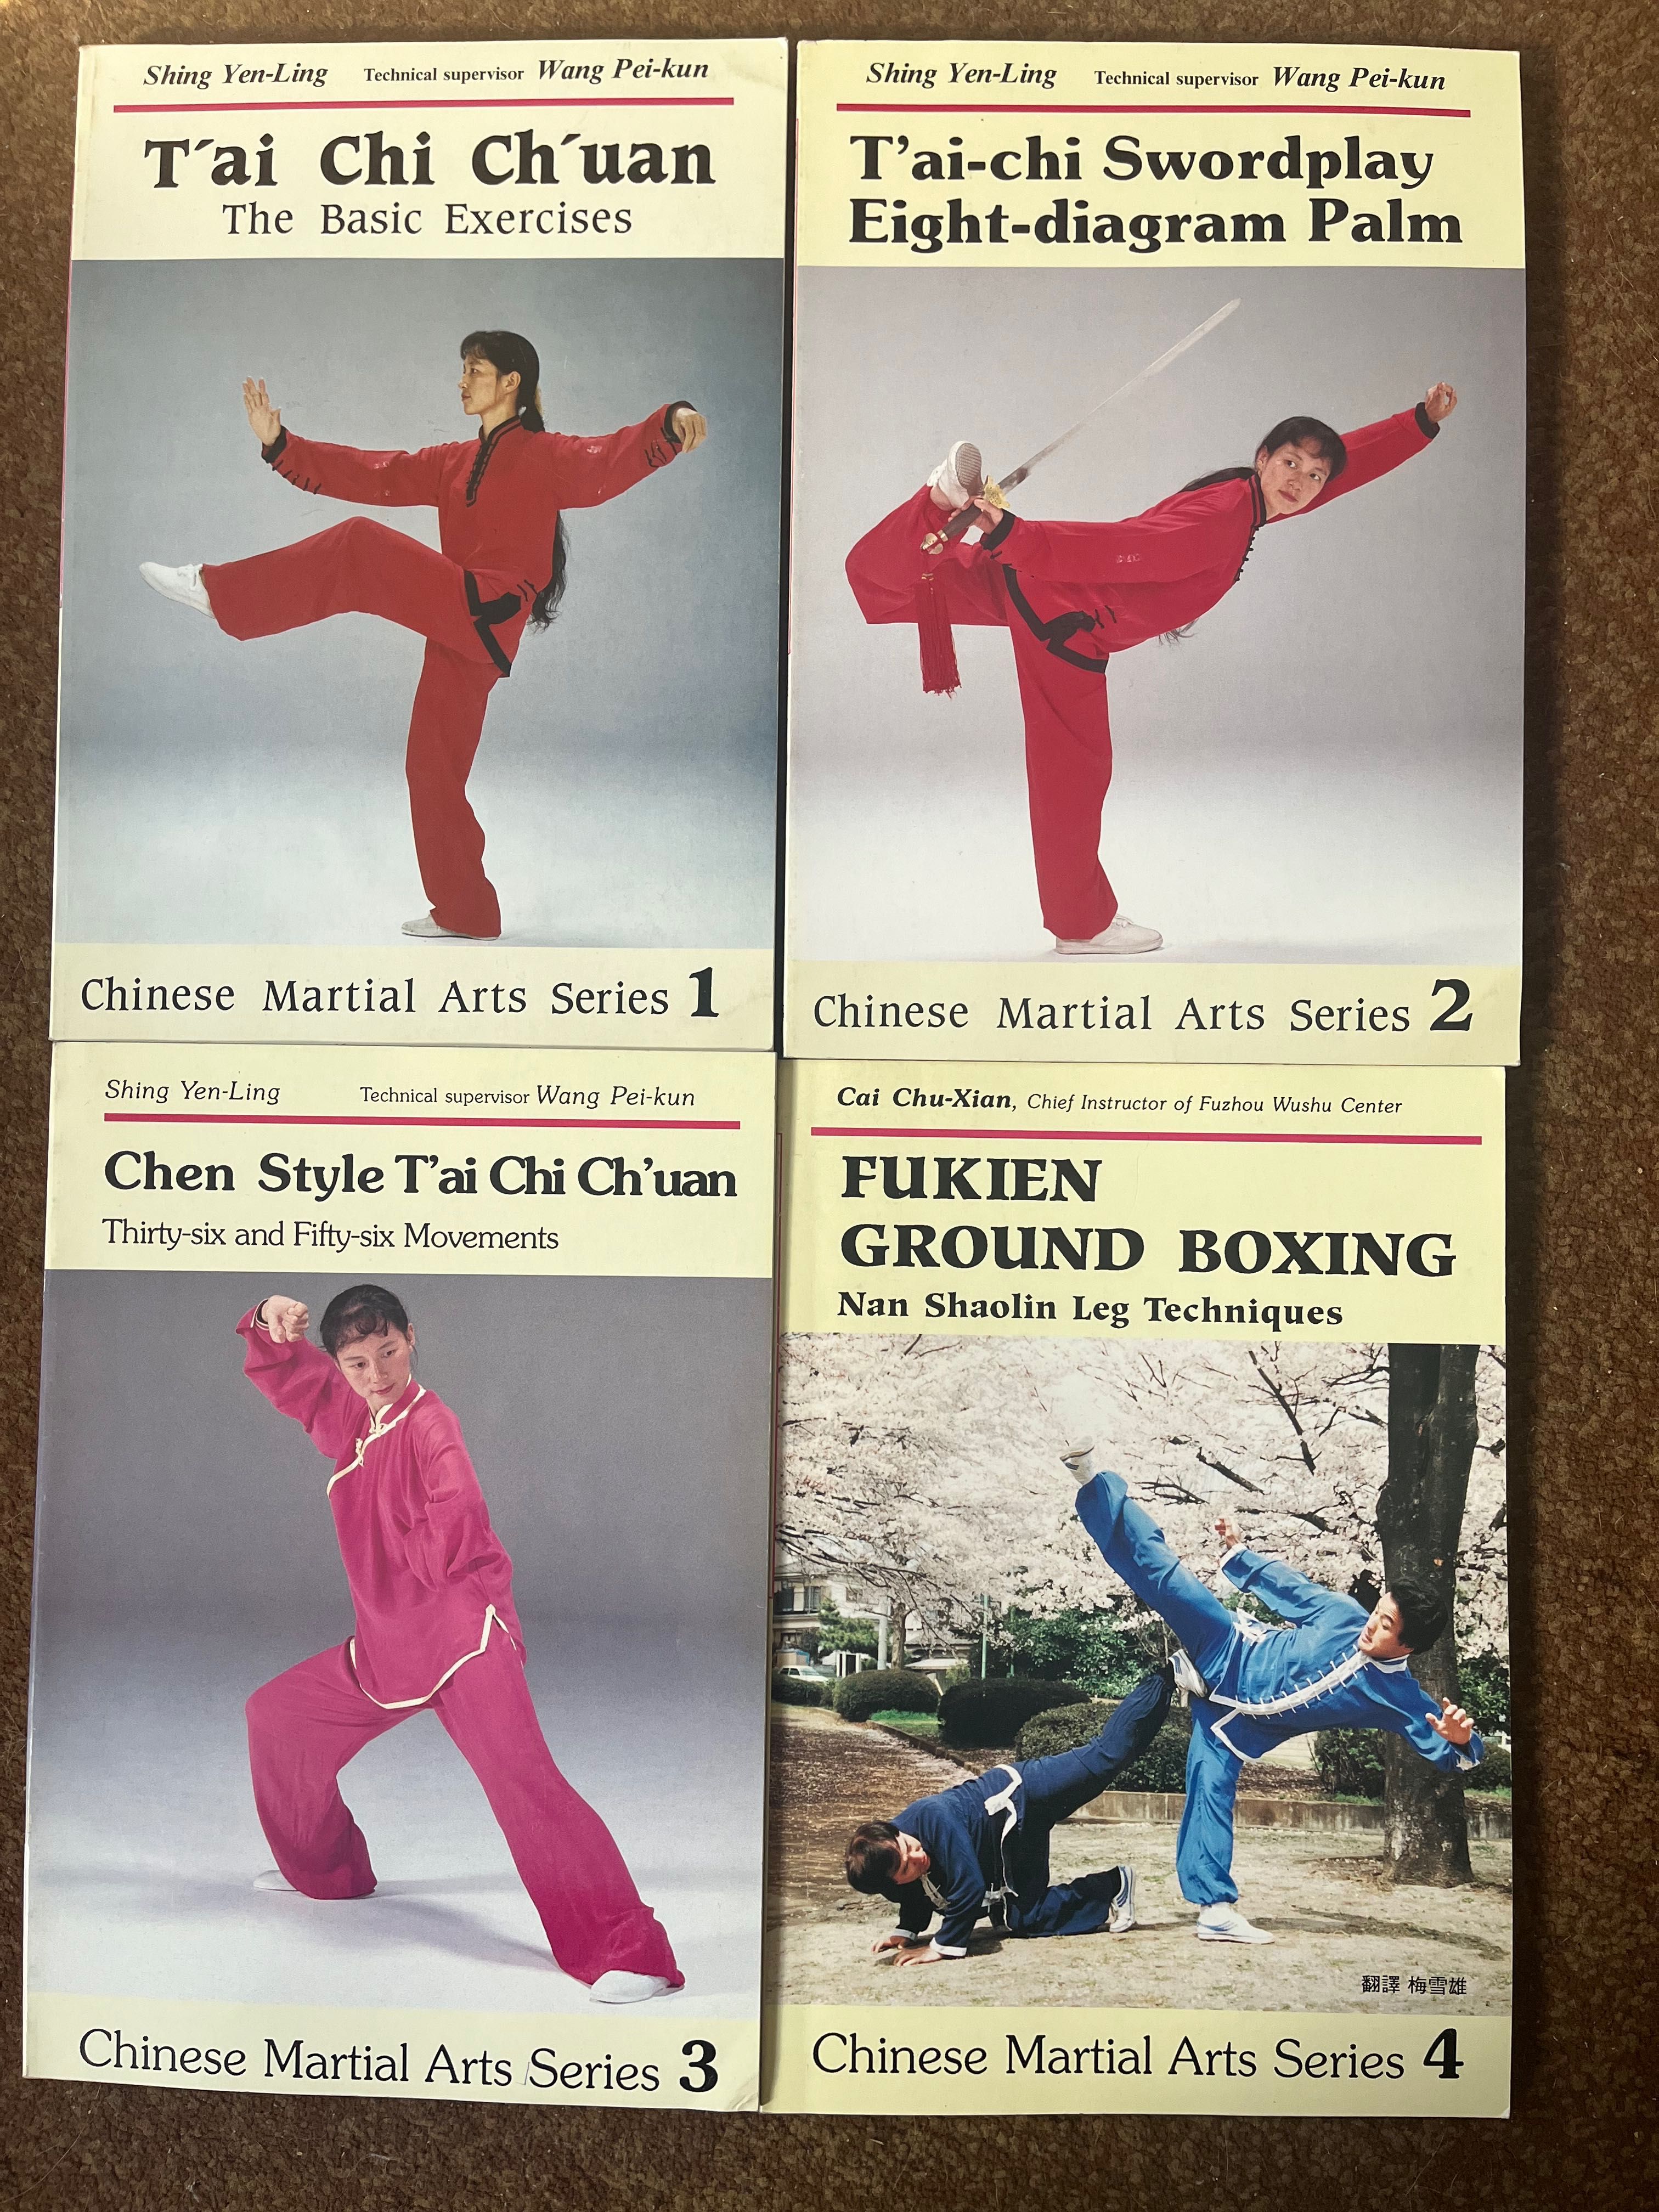 Chińskie sztuki walki Tai chi chuan